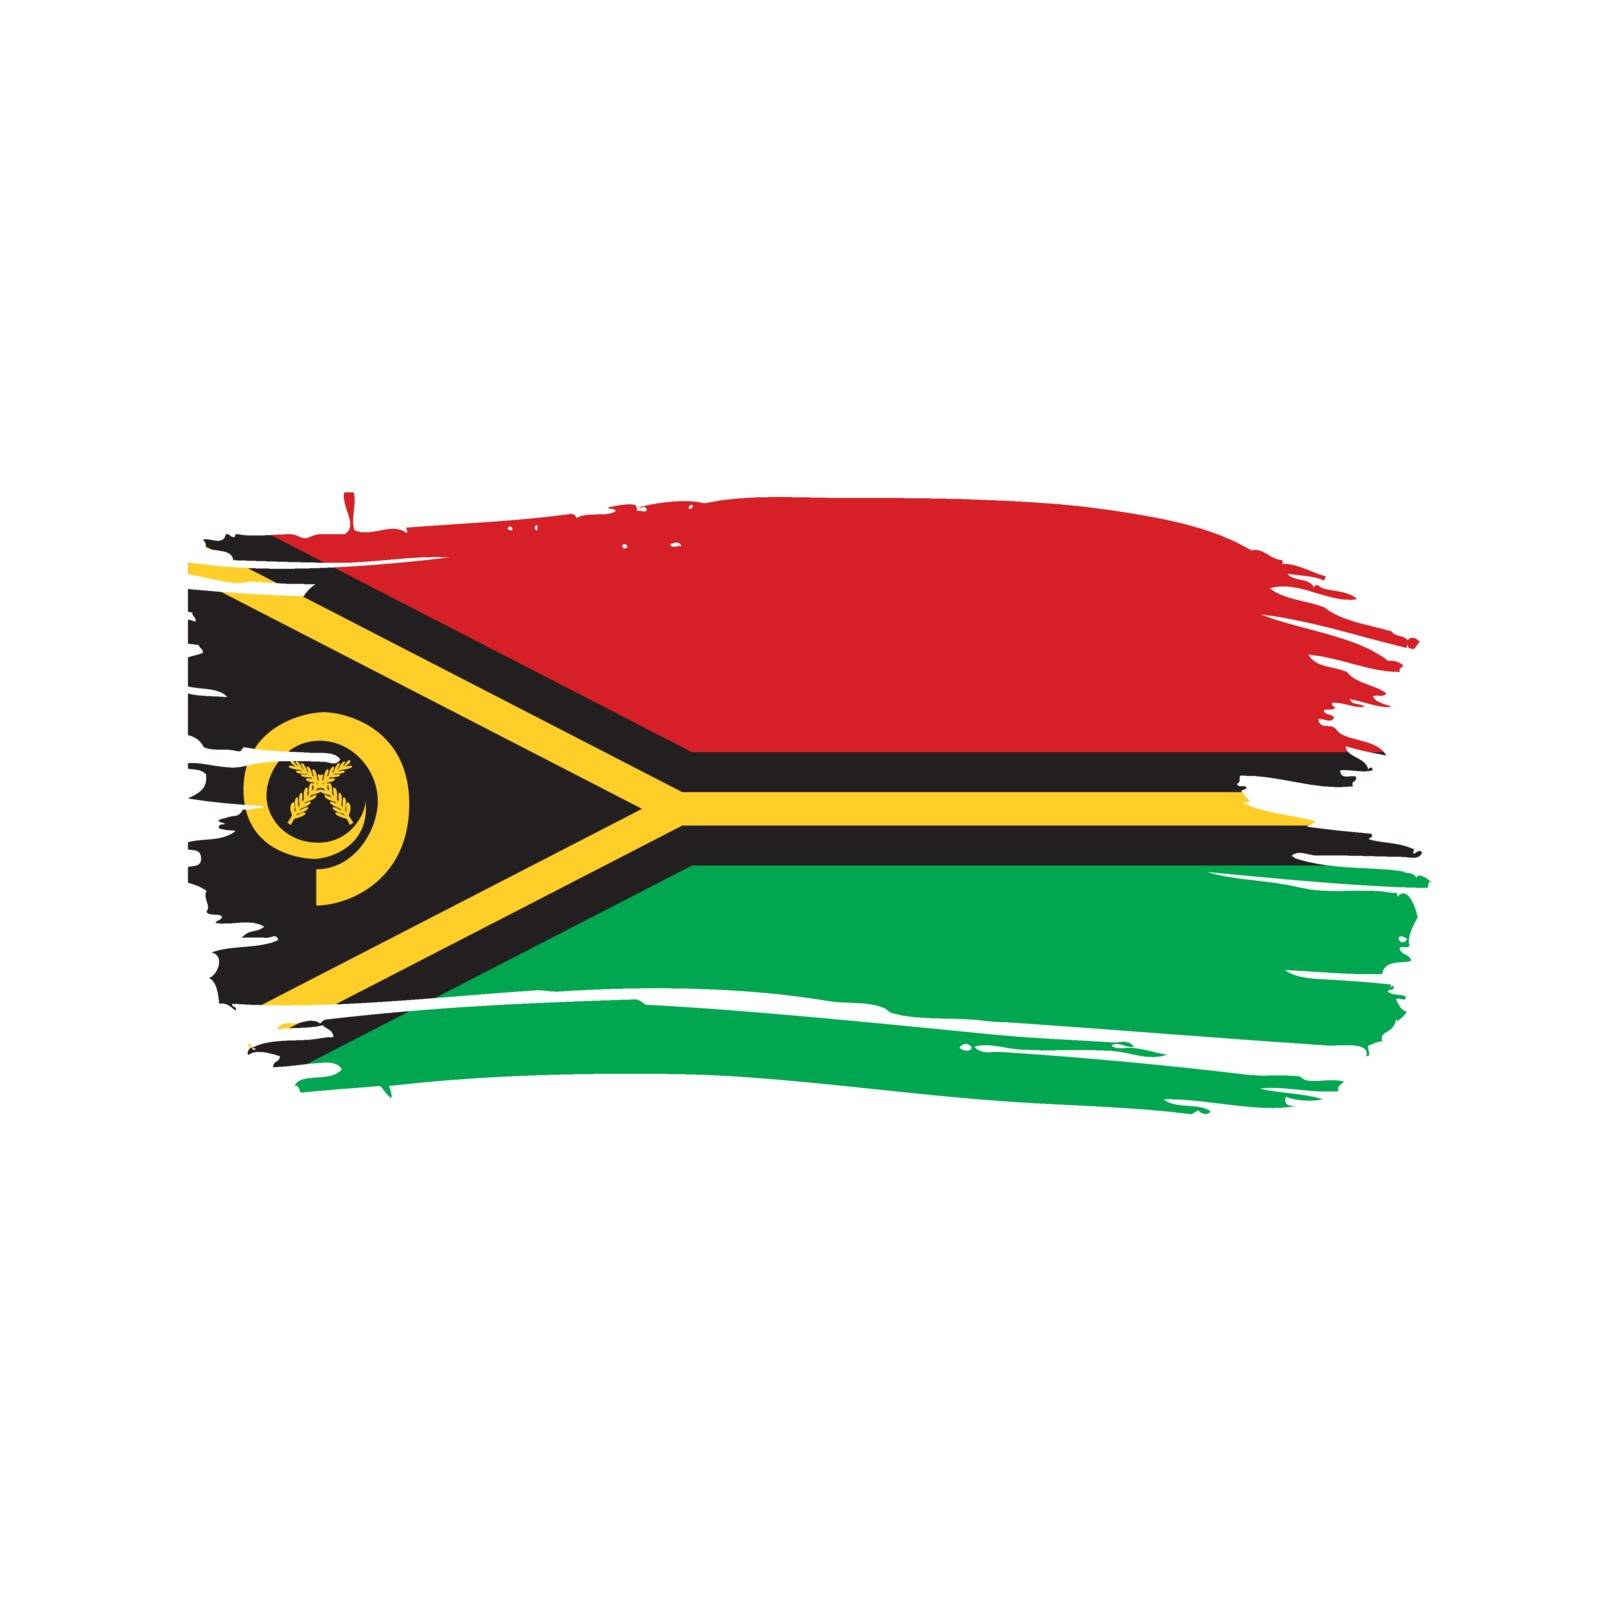 Vanuatu flag, vector illustration on a white background